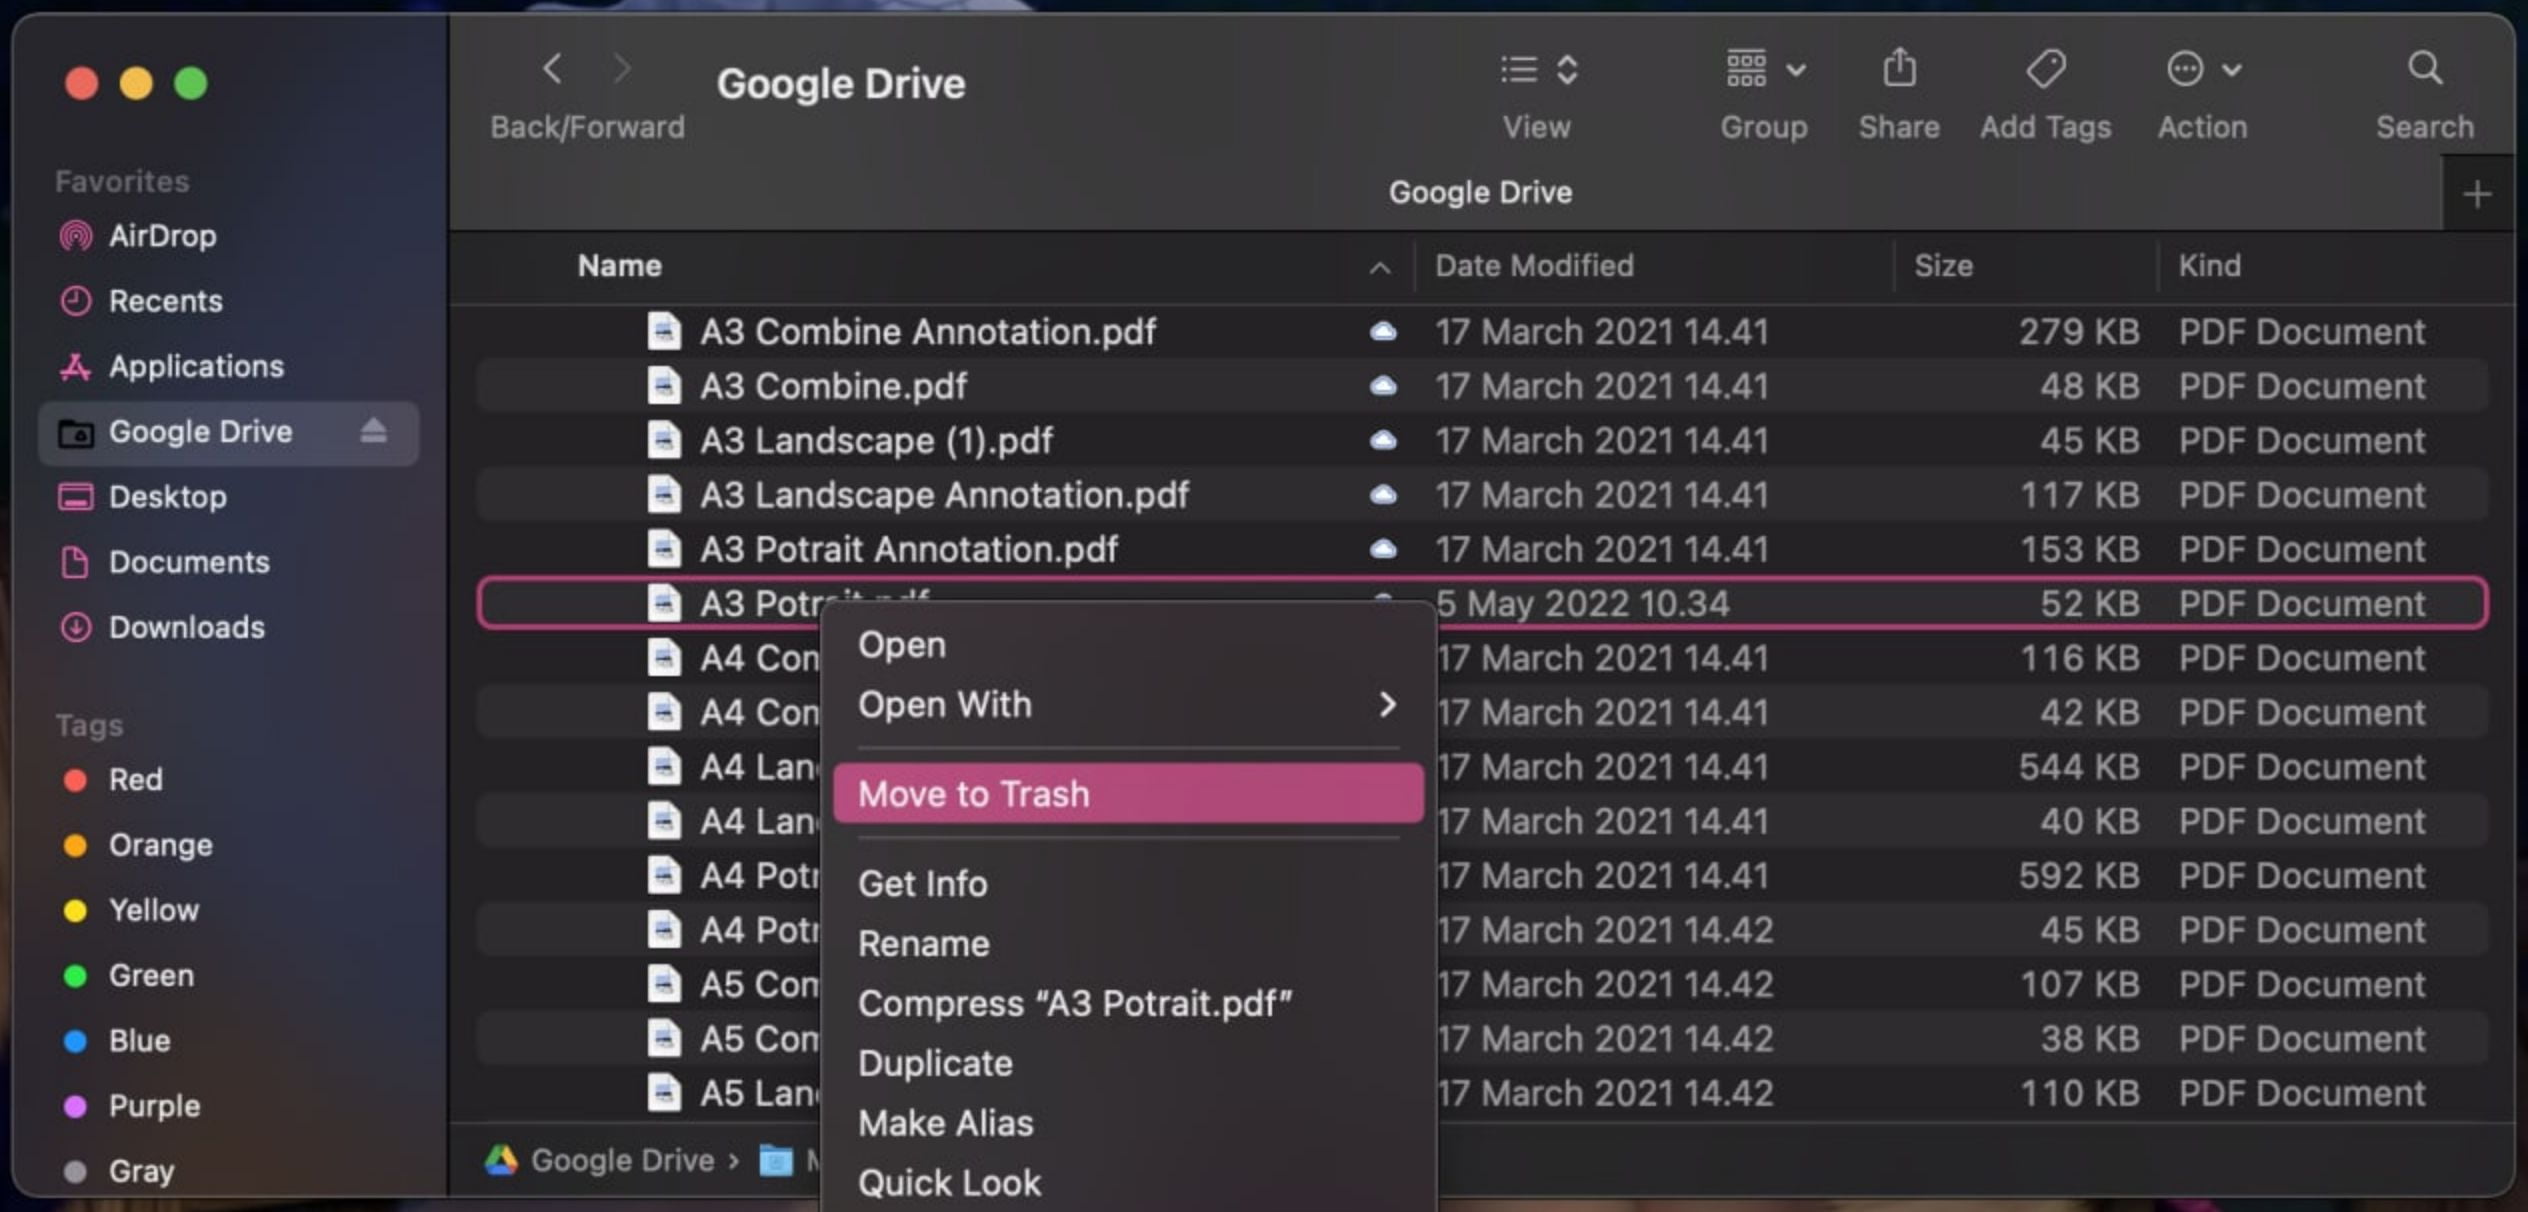 How to Delete Files From Google Drive on Mac or MacBook via Desktop App